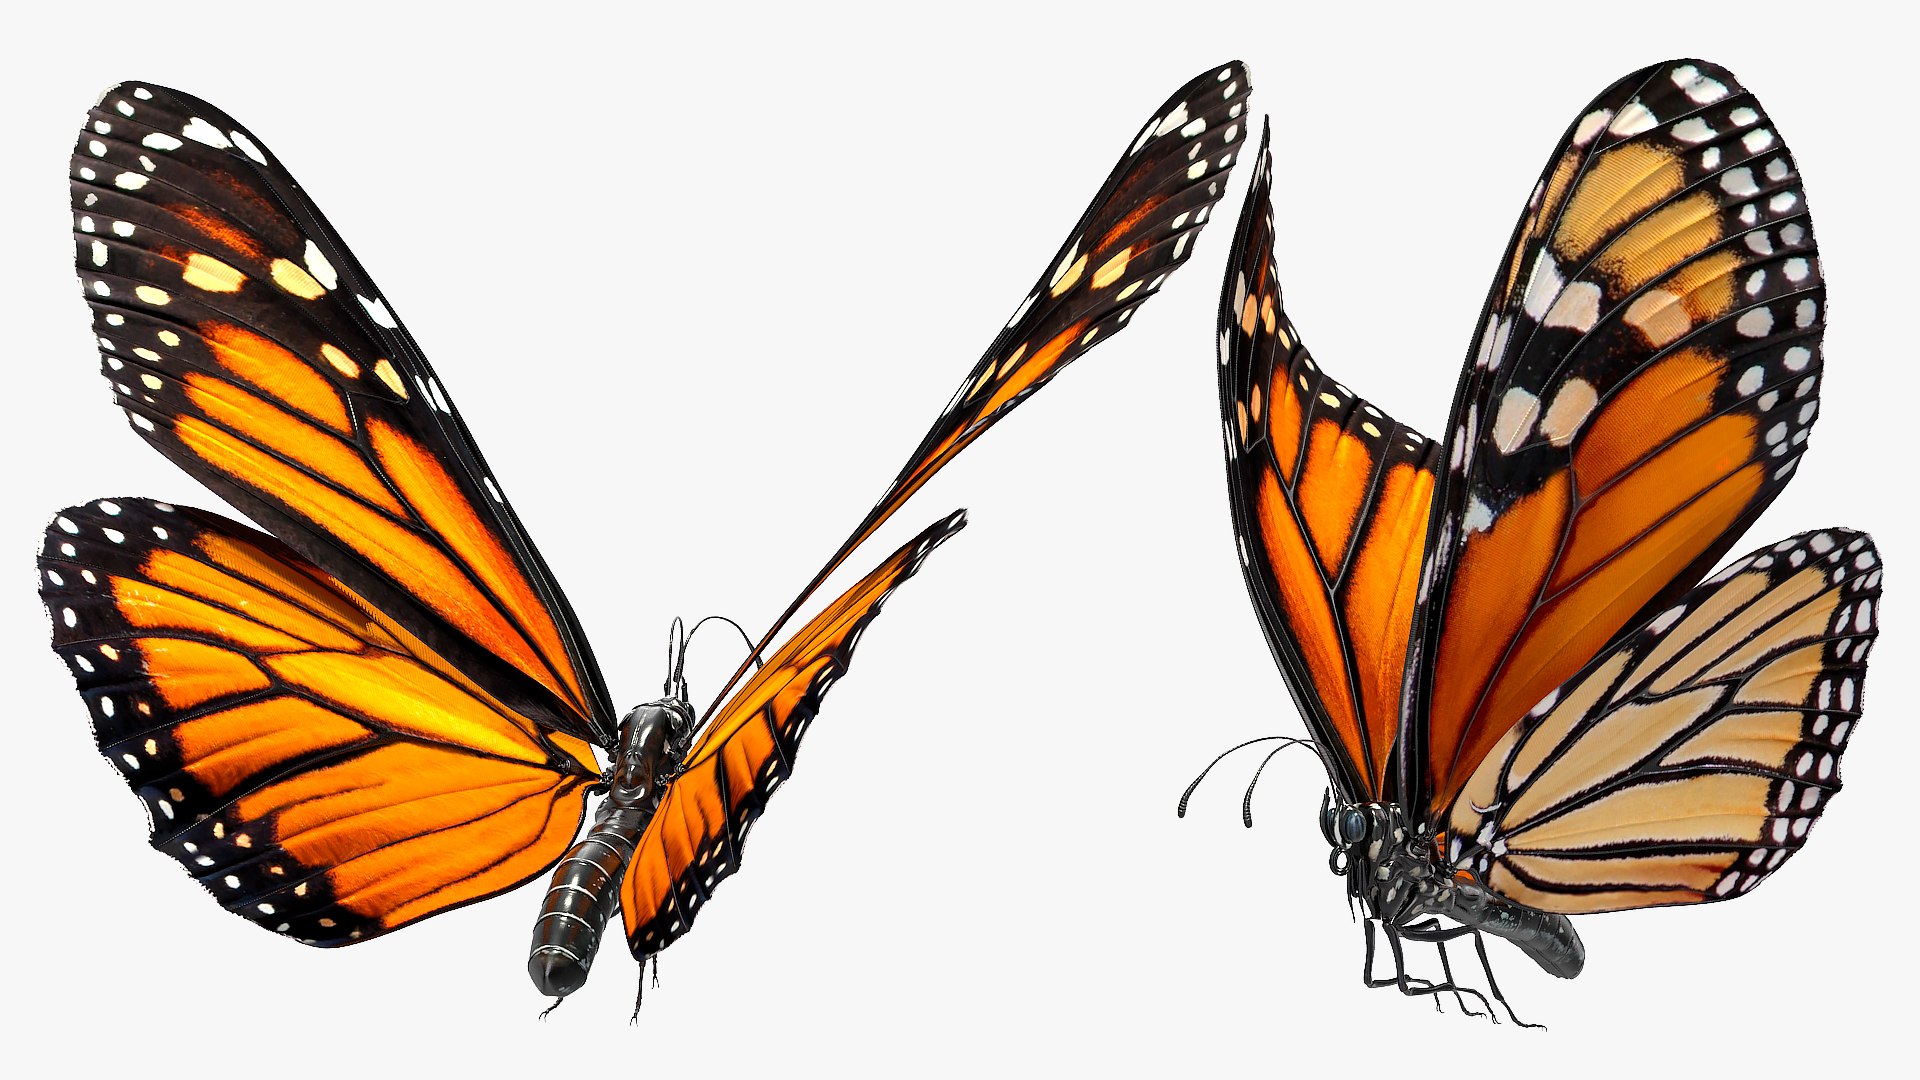 Monarch Butterfly Flying